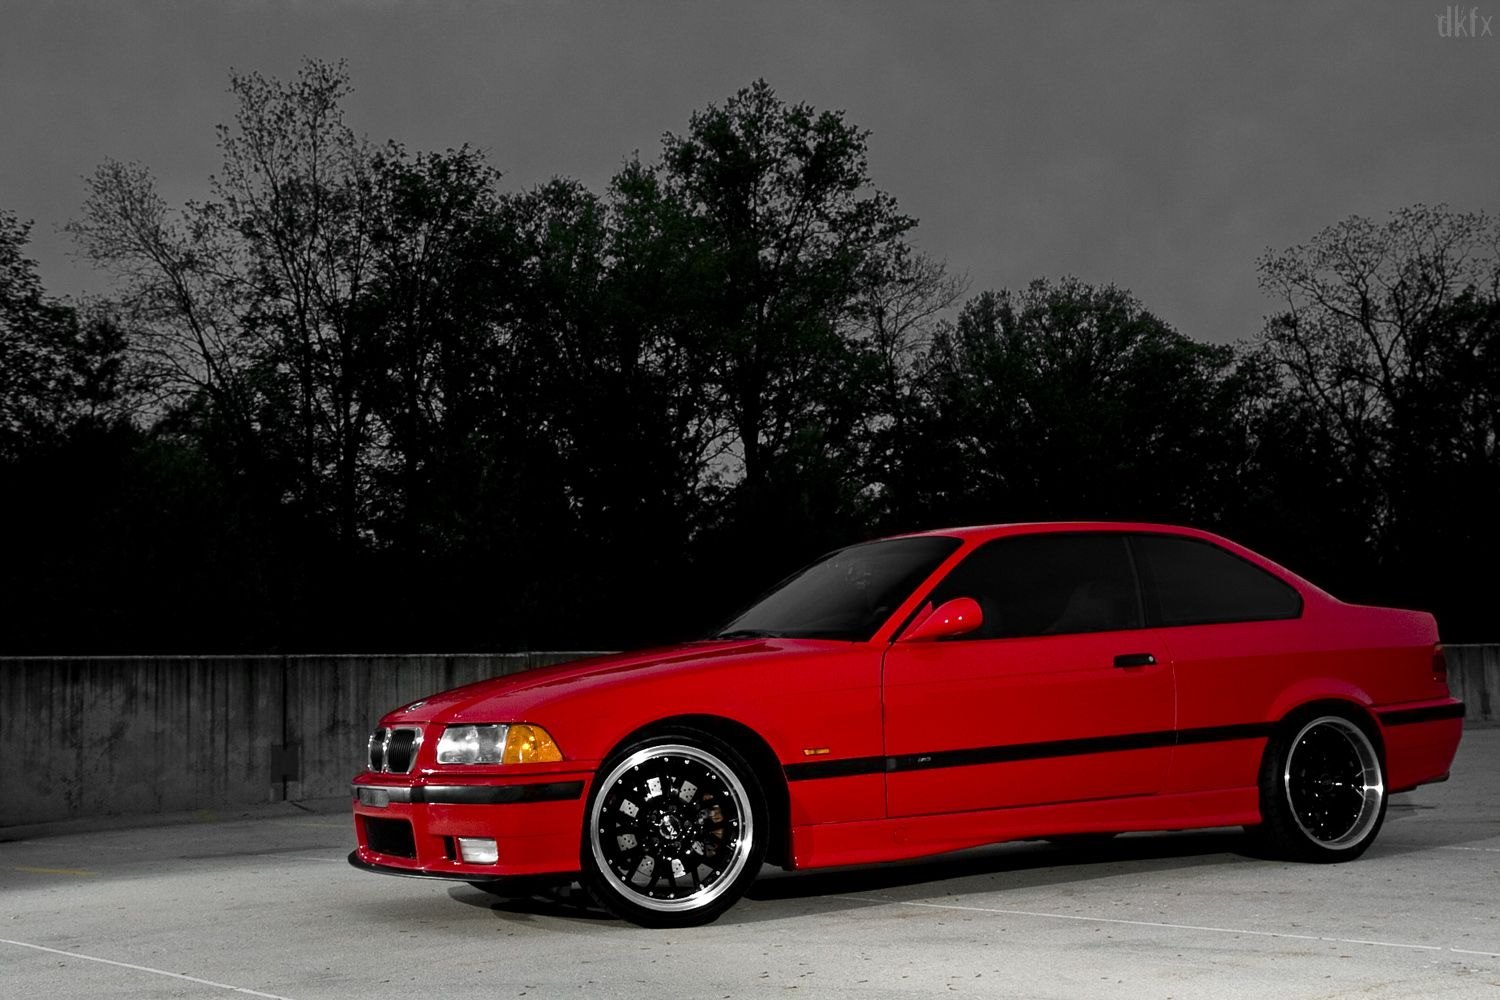 Red BMW 3-Series with Custom Gloss Black Rims - Photo by dan kinzie